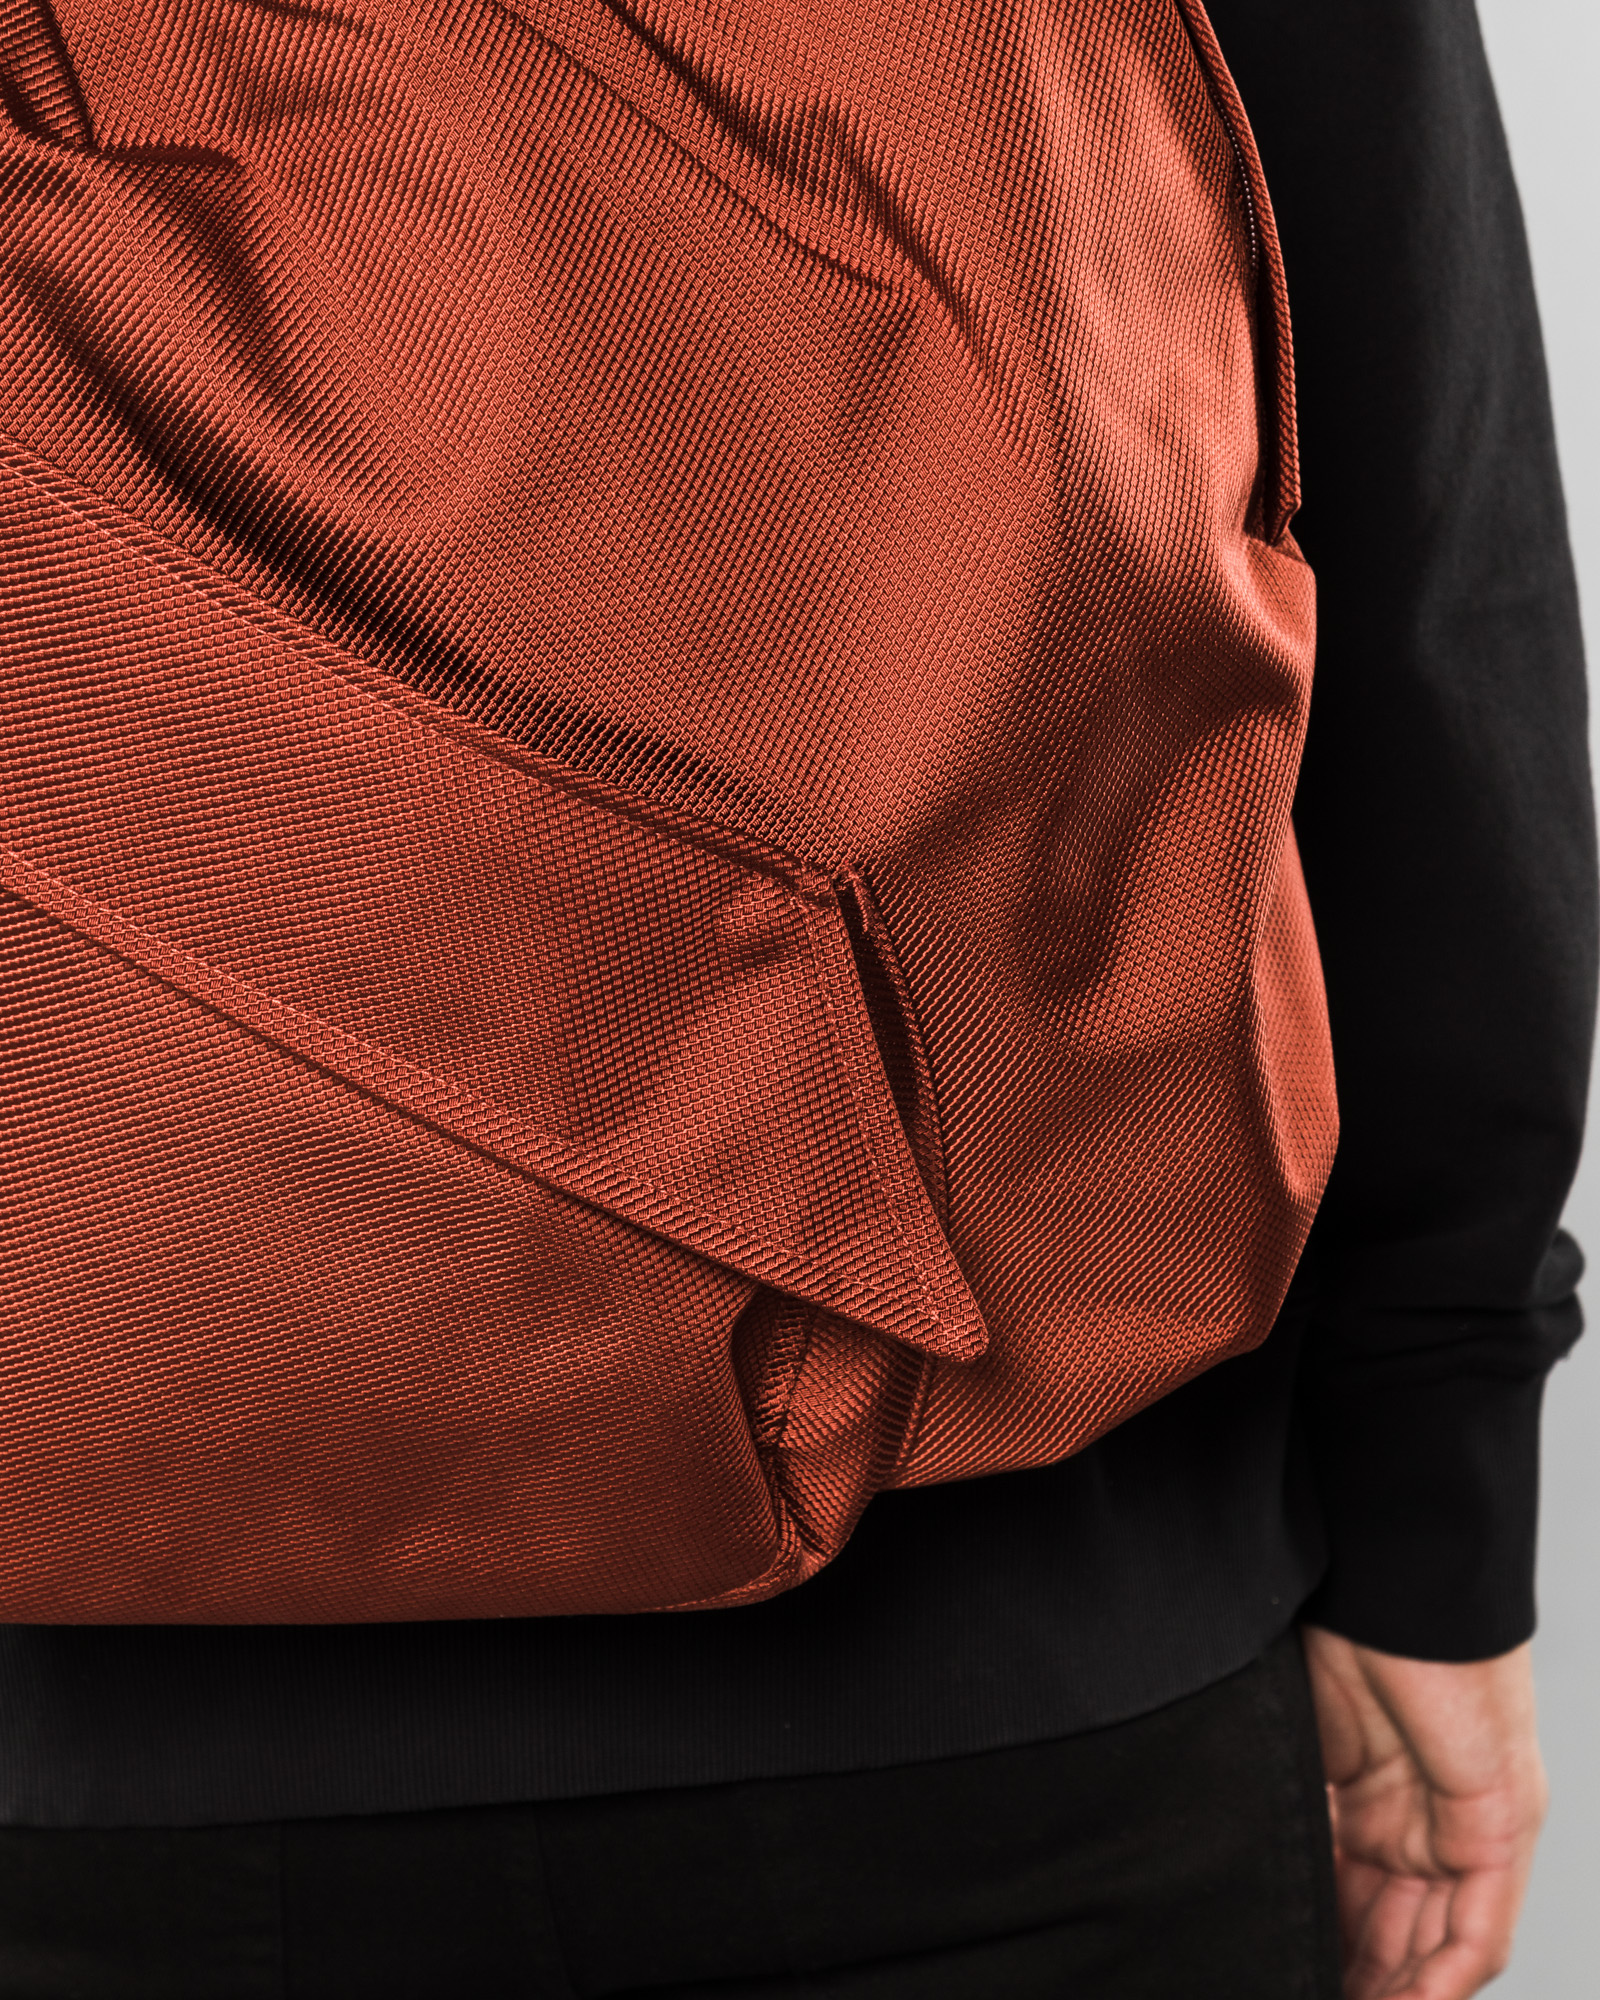 Eastpak x Raf Simons Classic Backpack Eastpak Accessories_Clothing Backpacks  Red